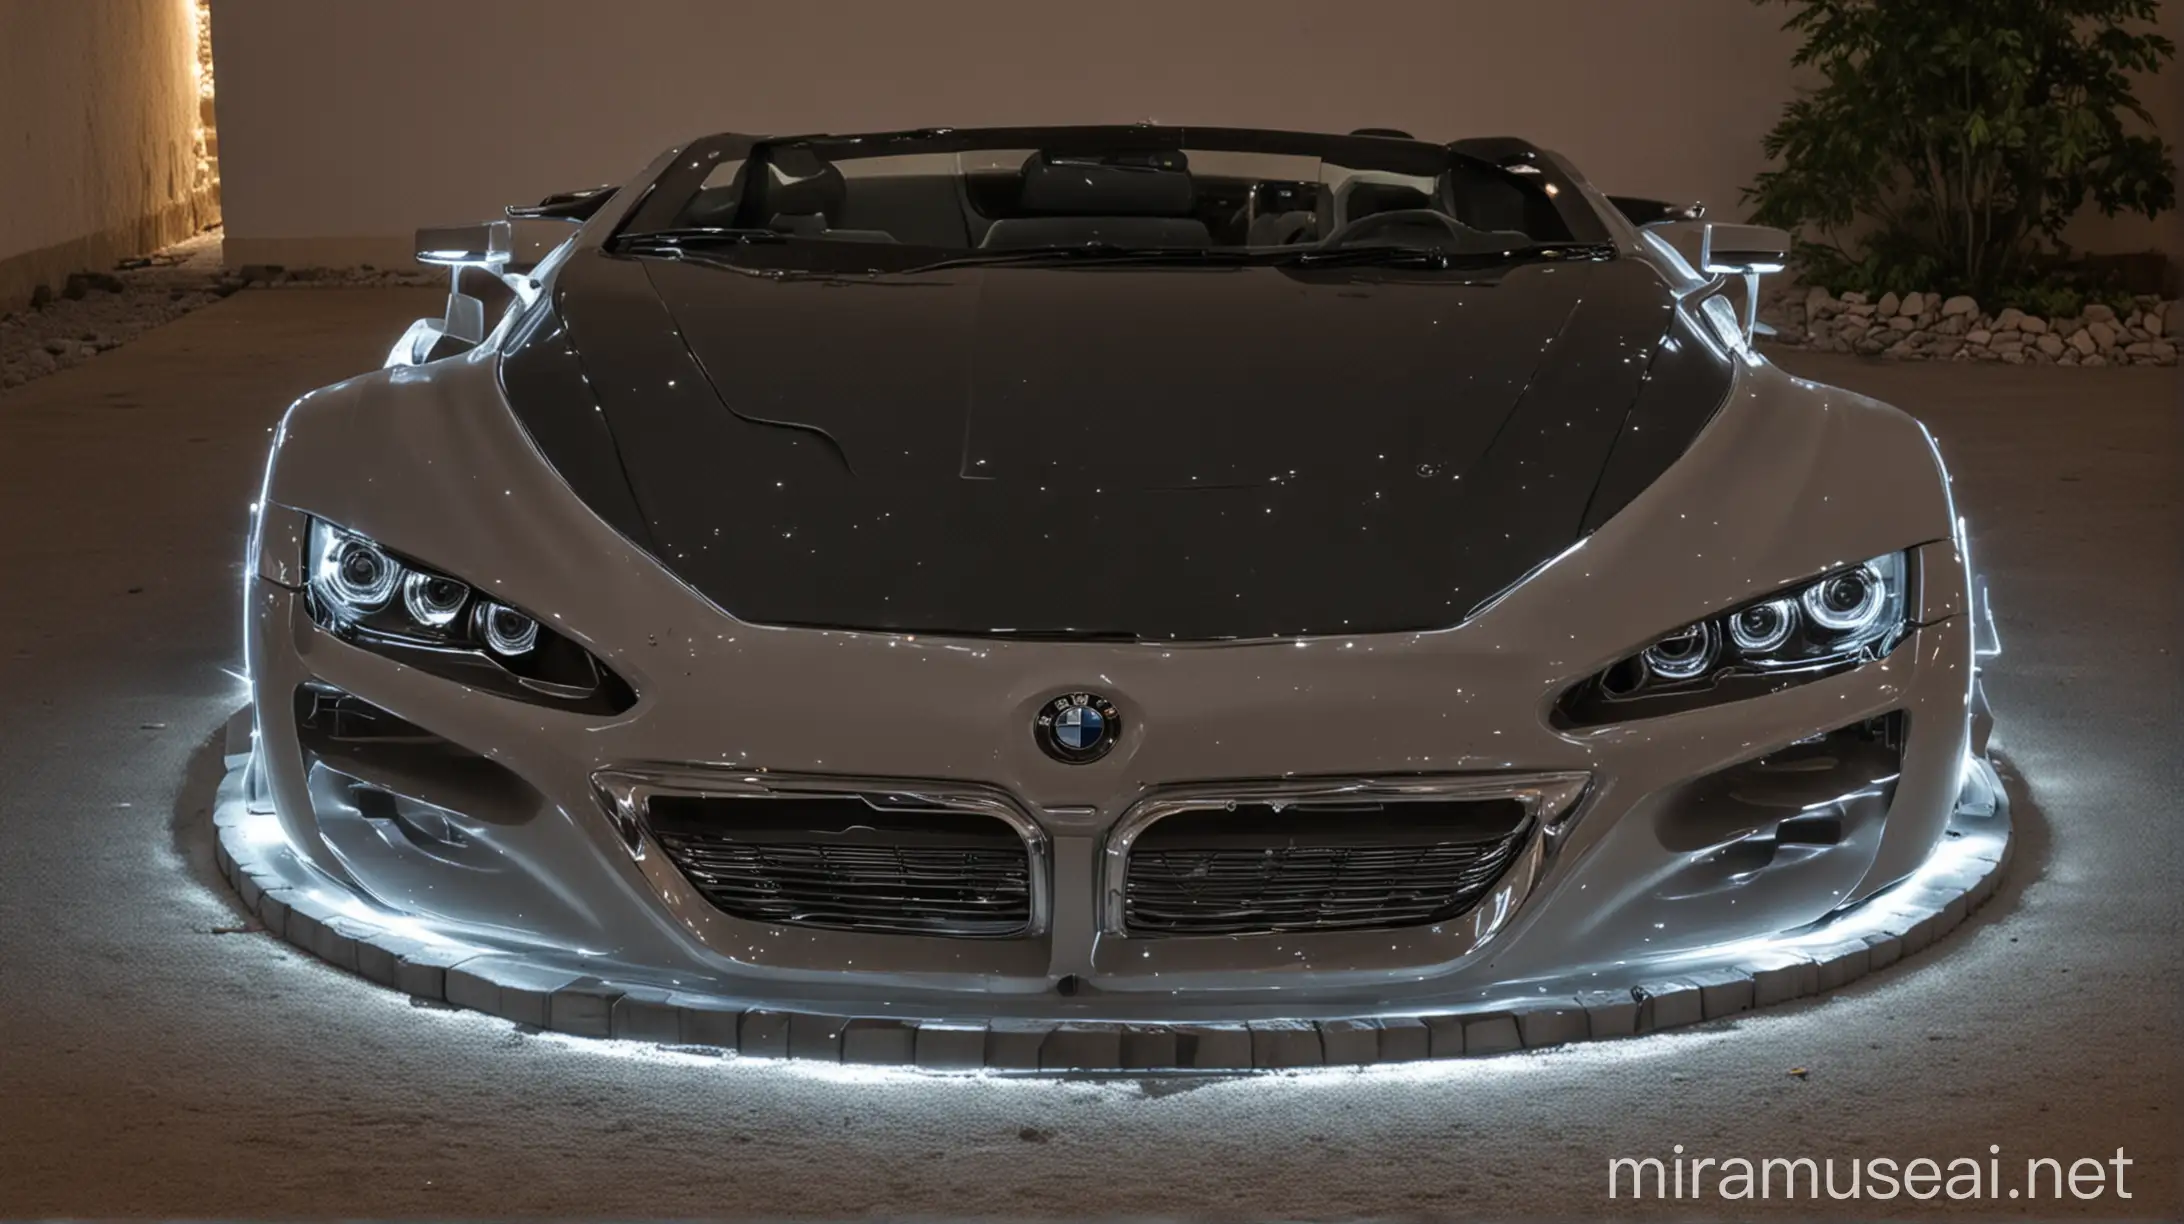 Luxurious BMW CarShaped Jacuzzi with Illuminated Headlights